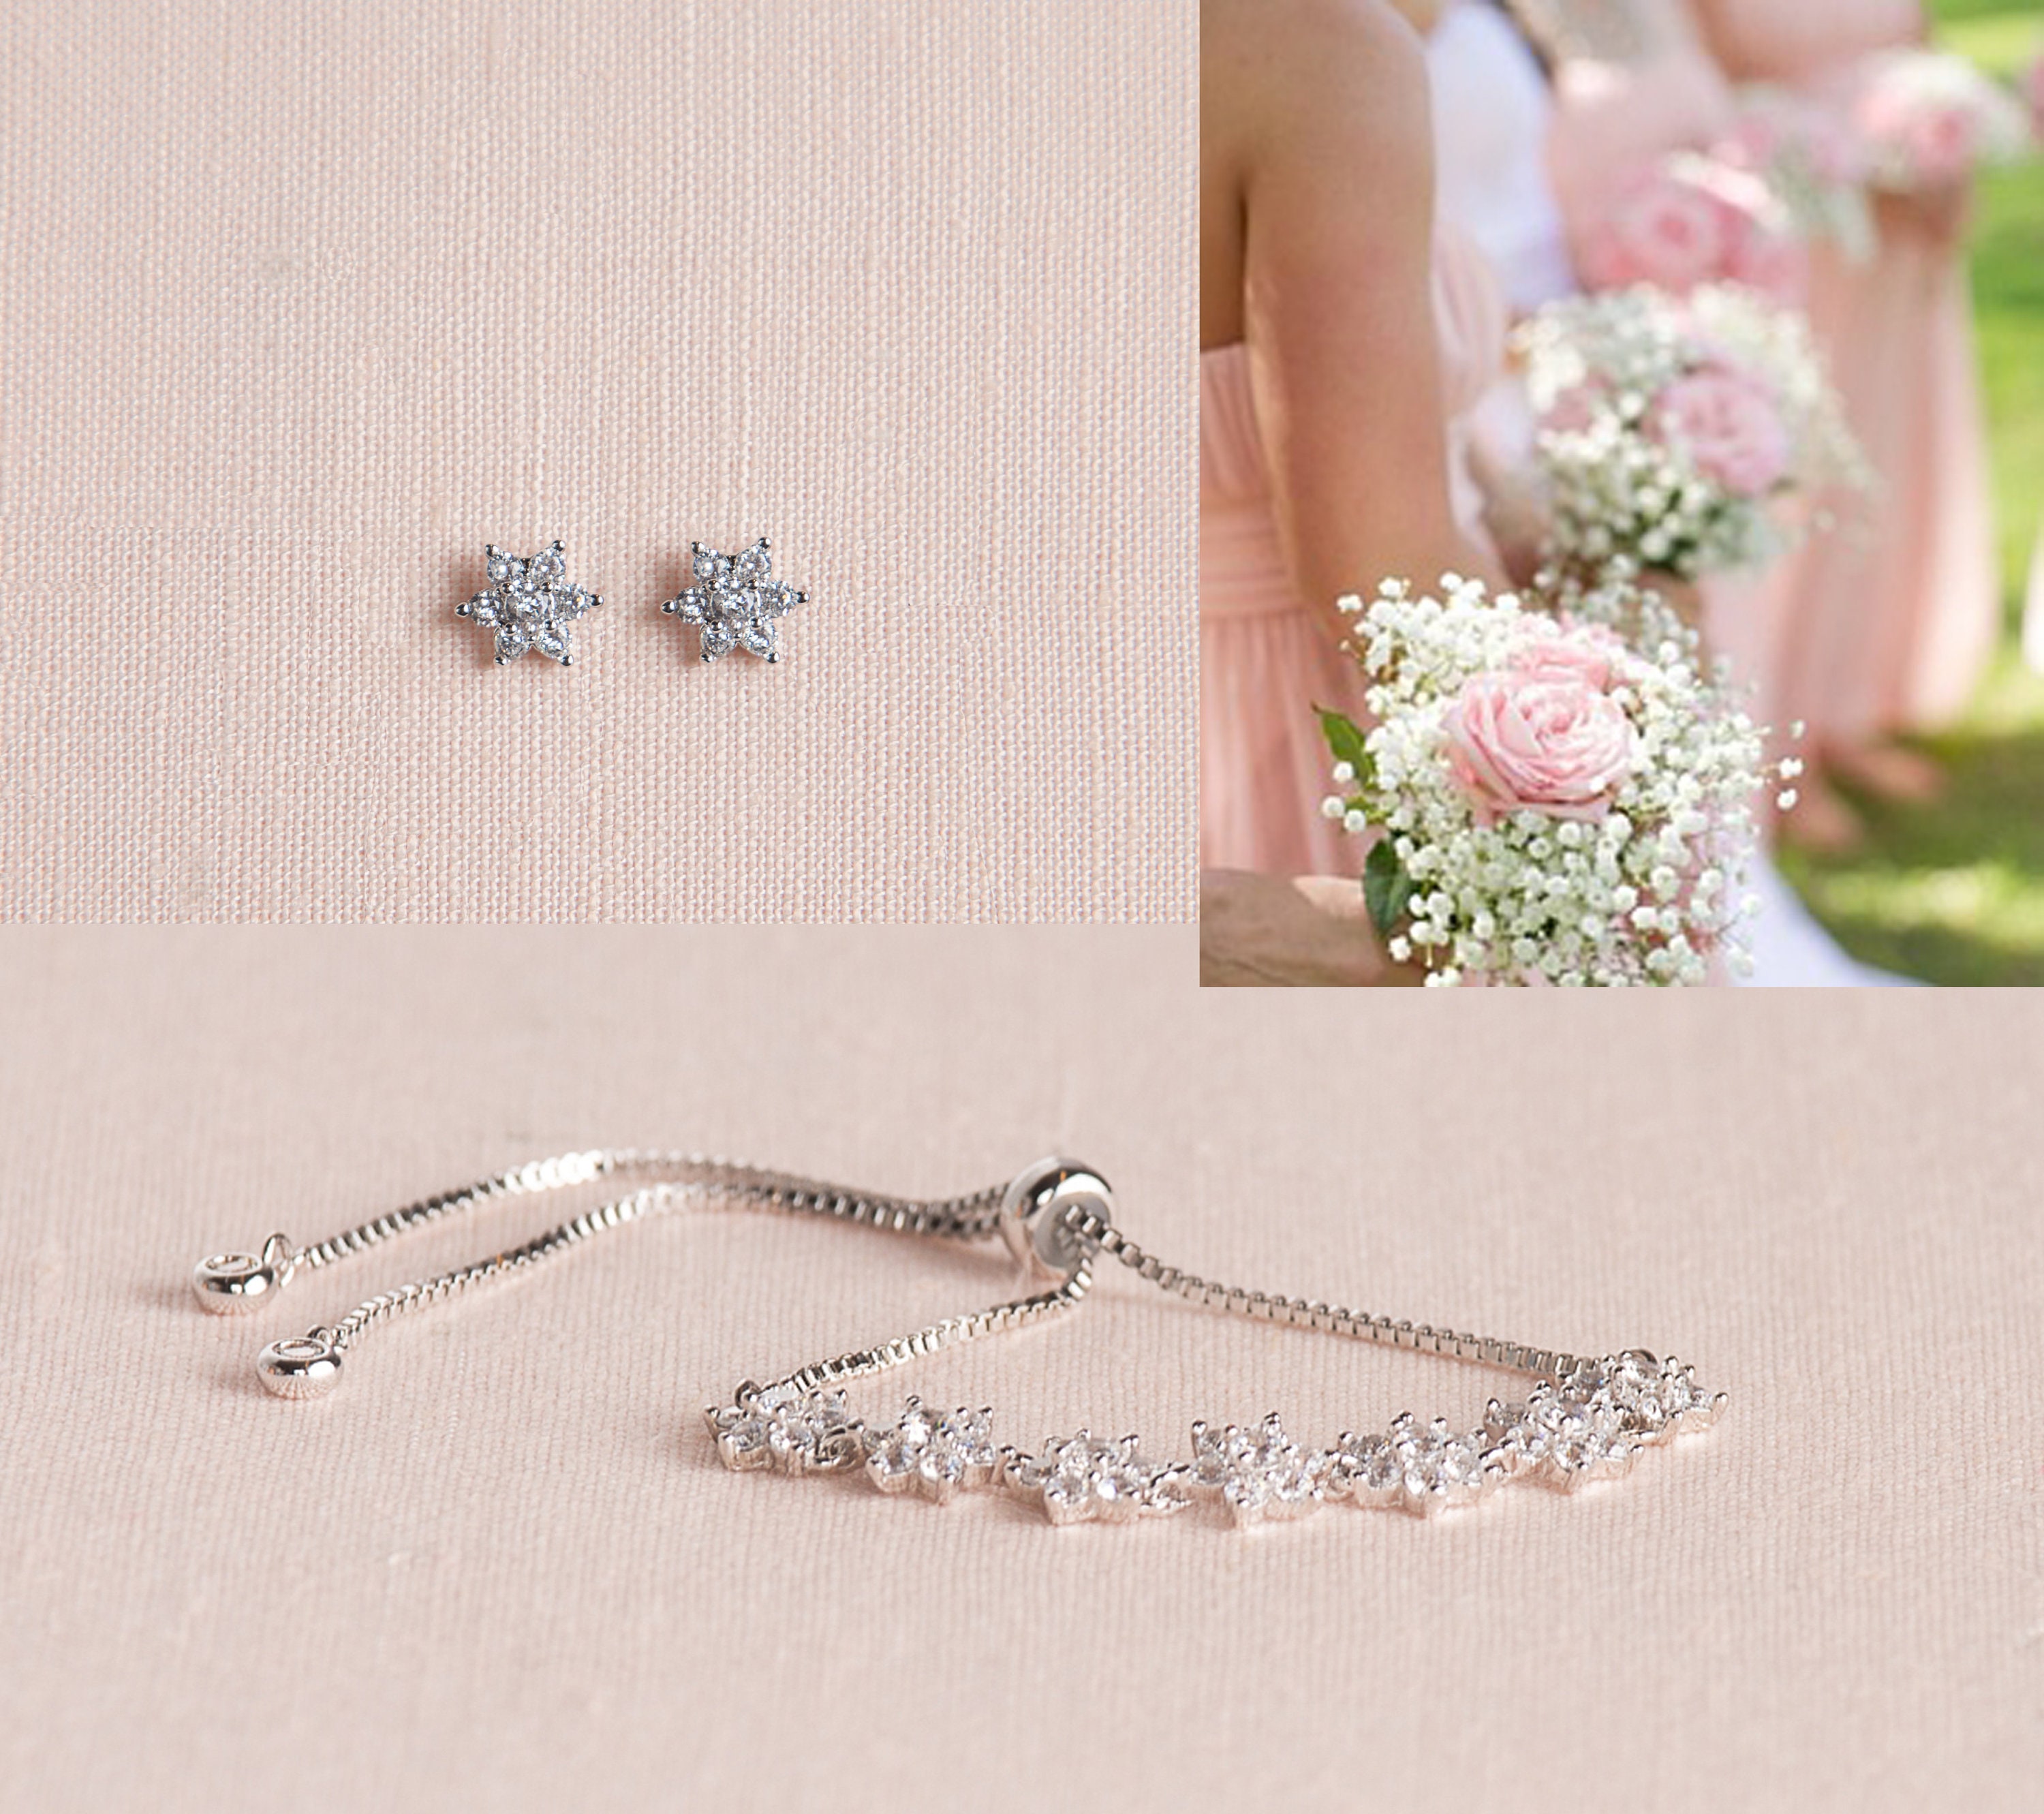 Dazzling Pink Sunflower Screw Back Earrings for Girls ~ 14K White Gold | Jewelry Vine